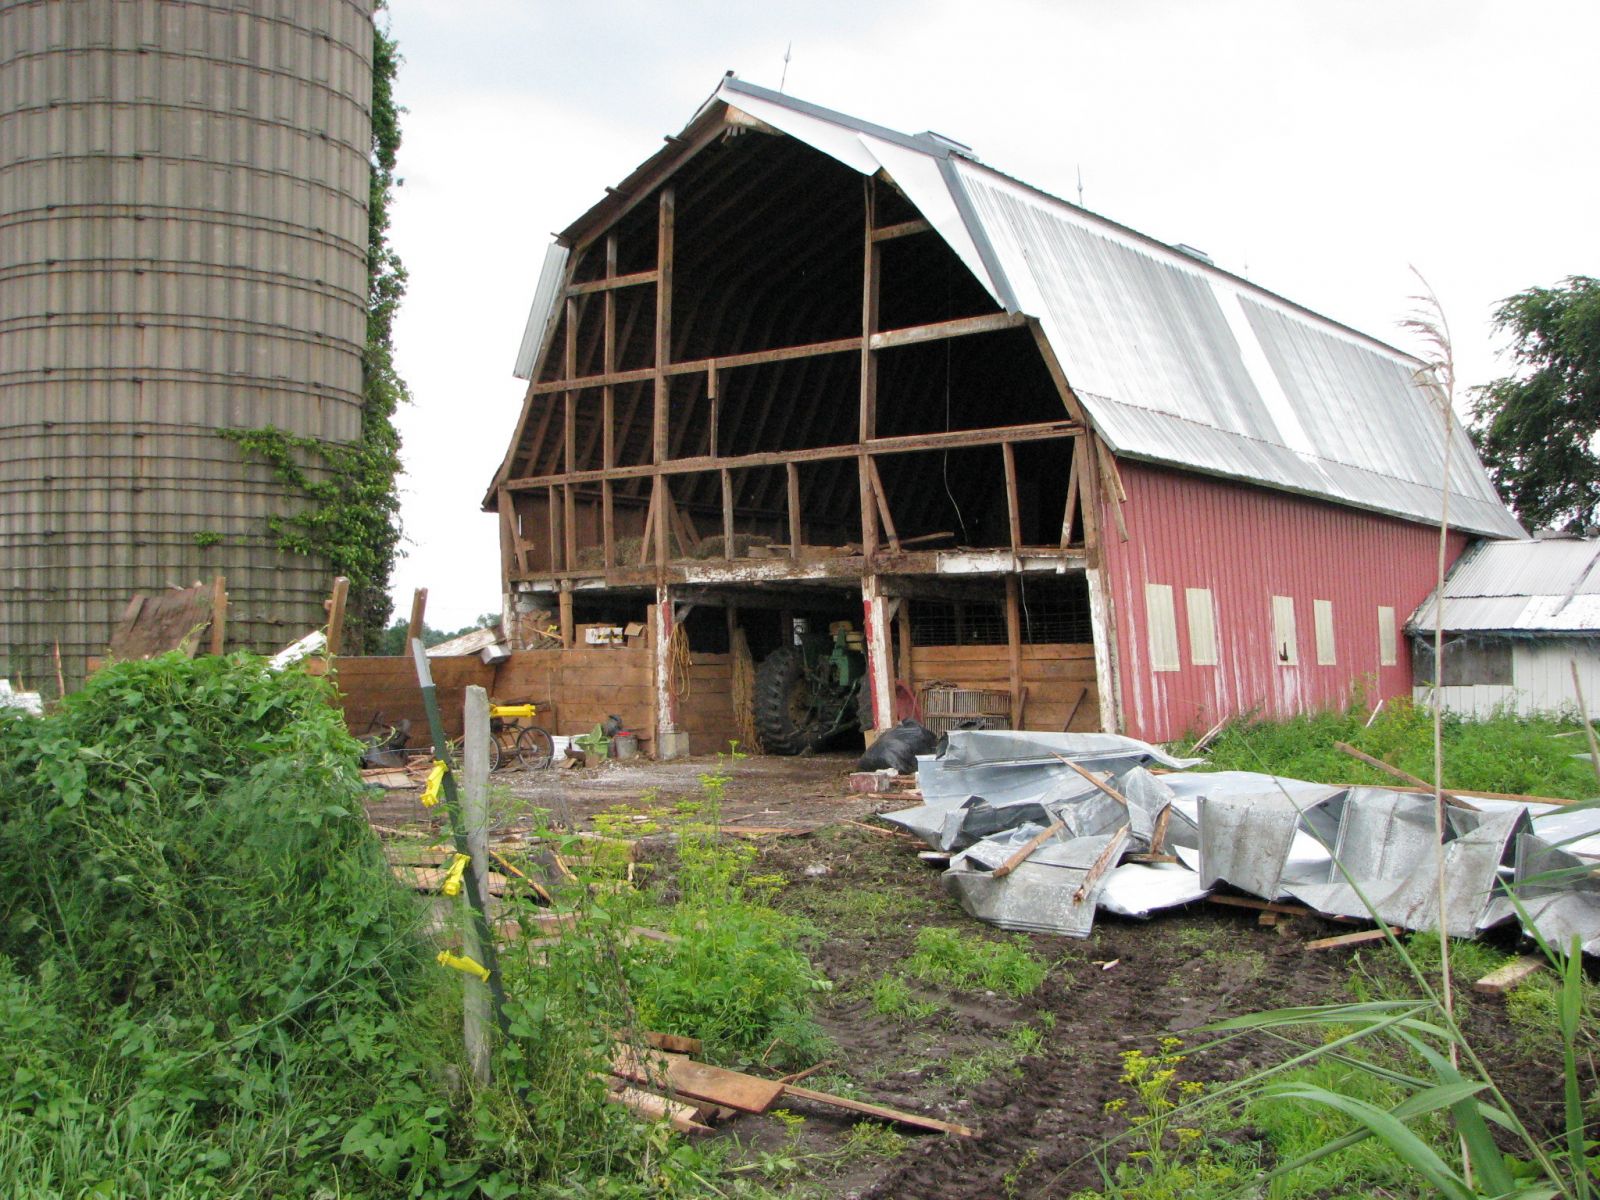 This image/photo shows Barn damage